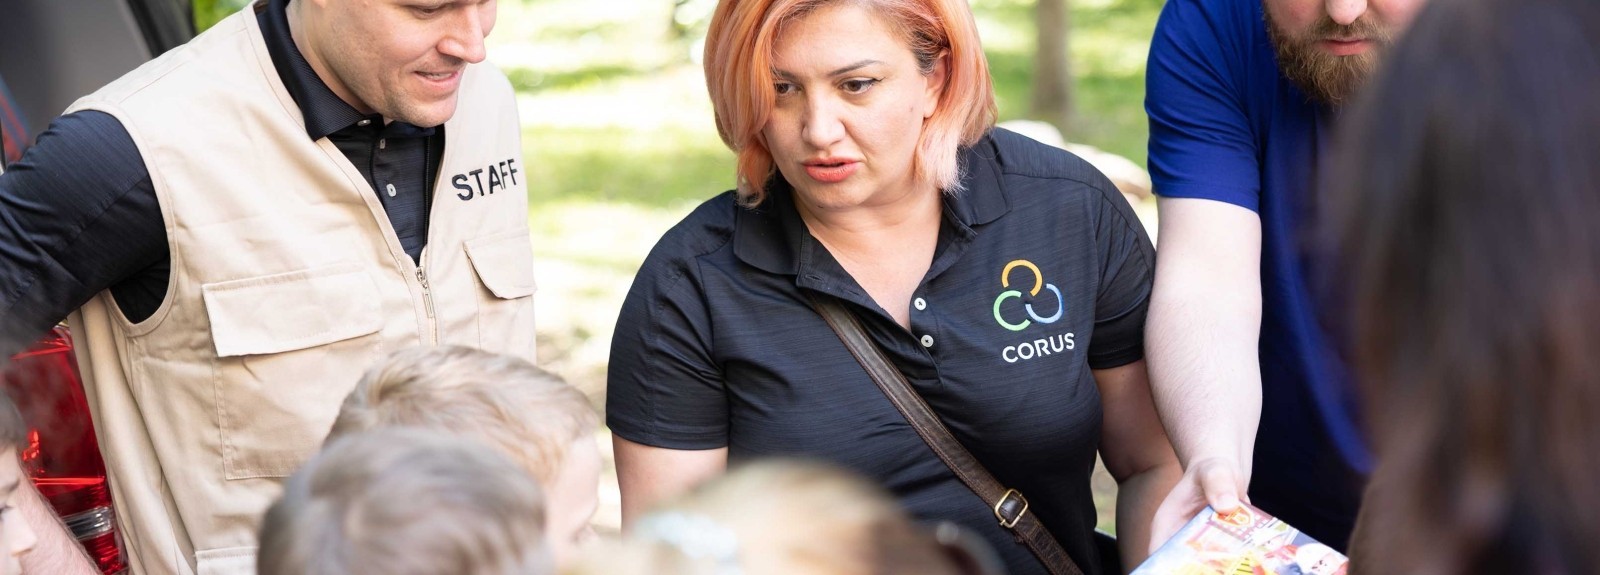 Corus aid reaches Ukrainians